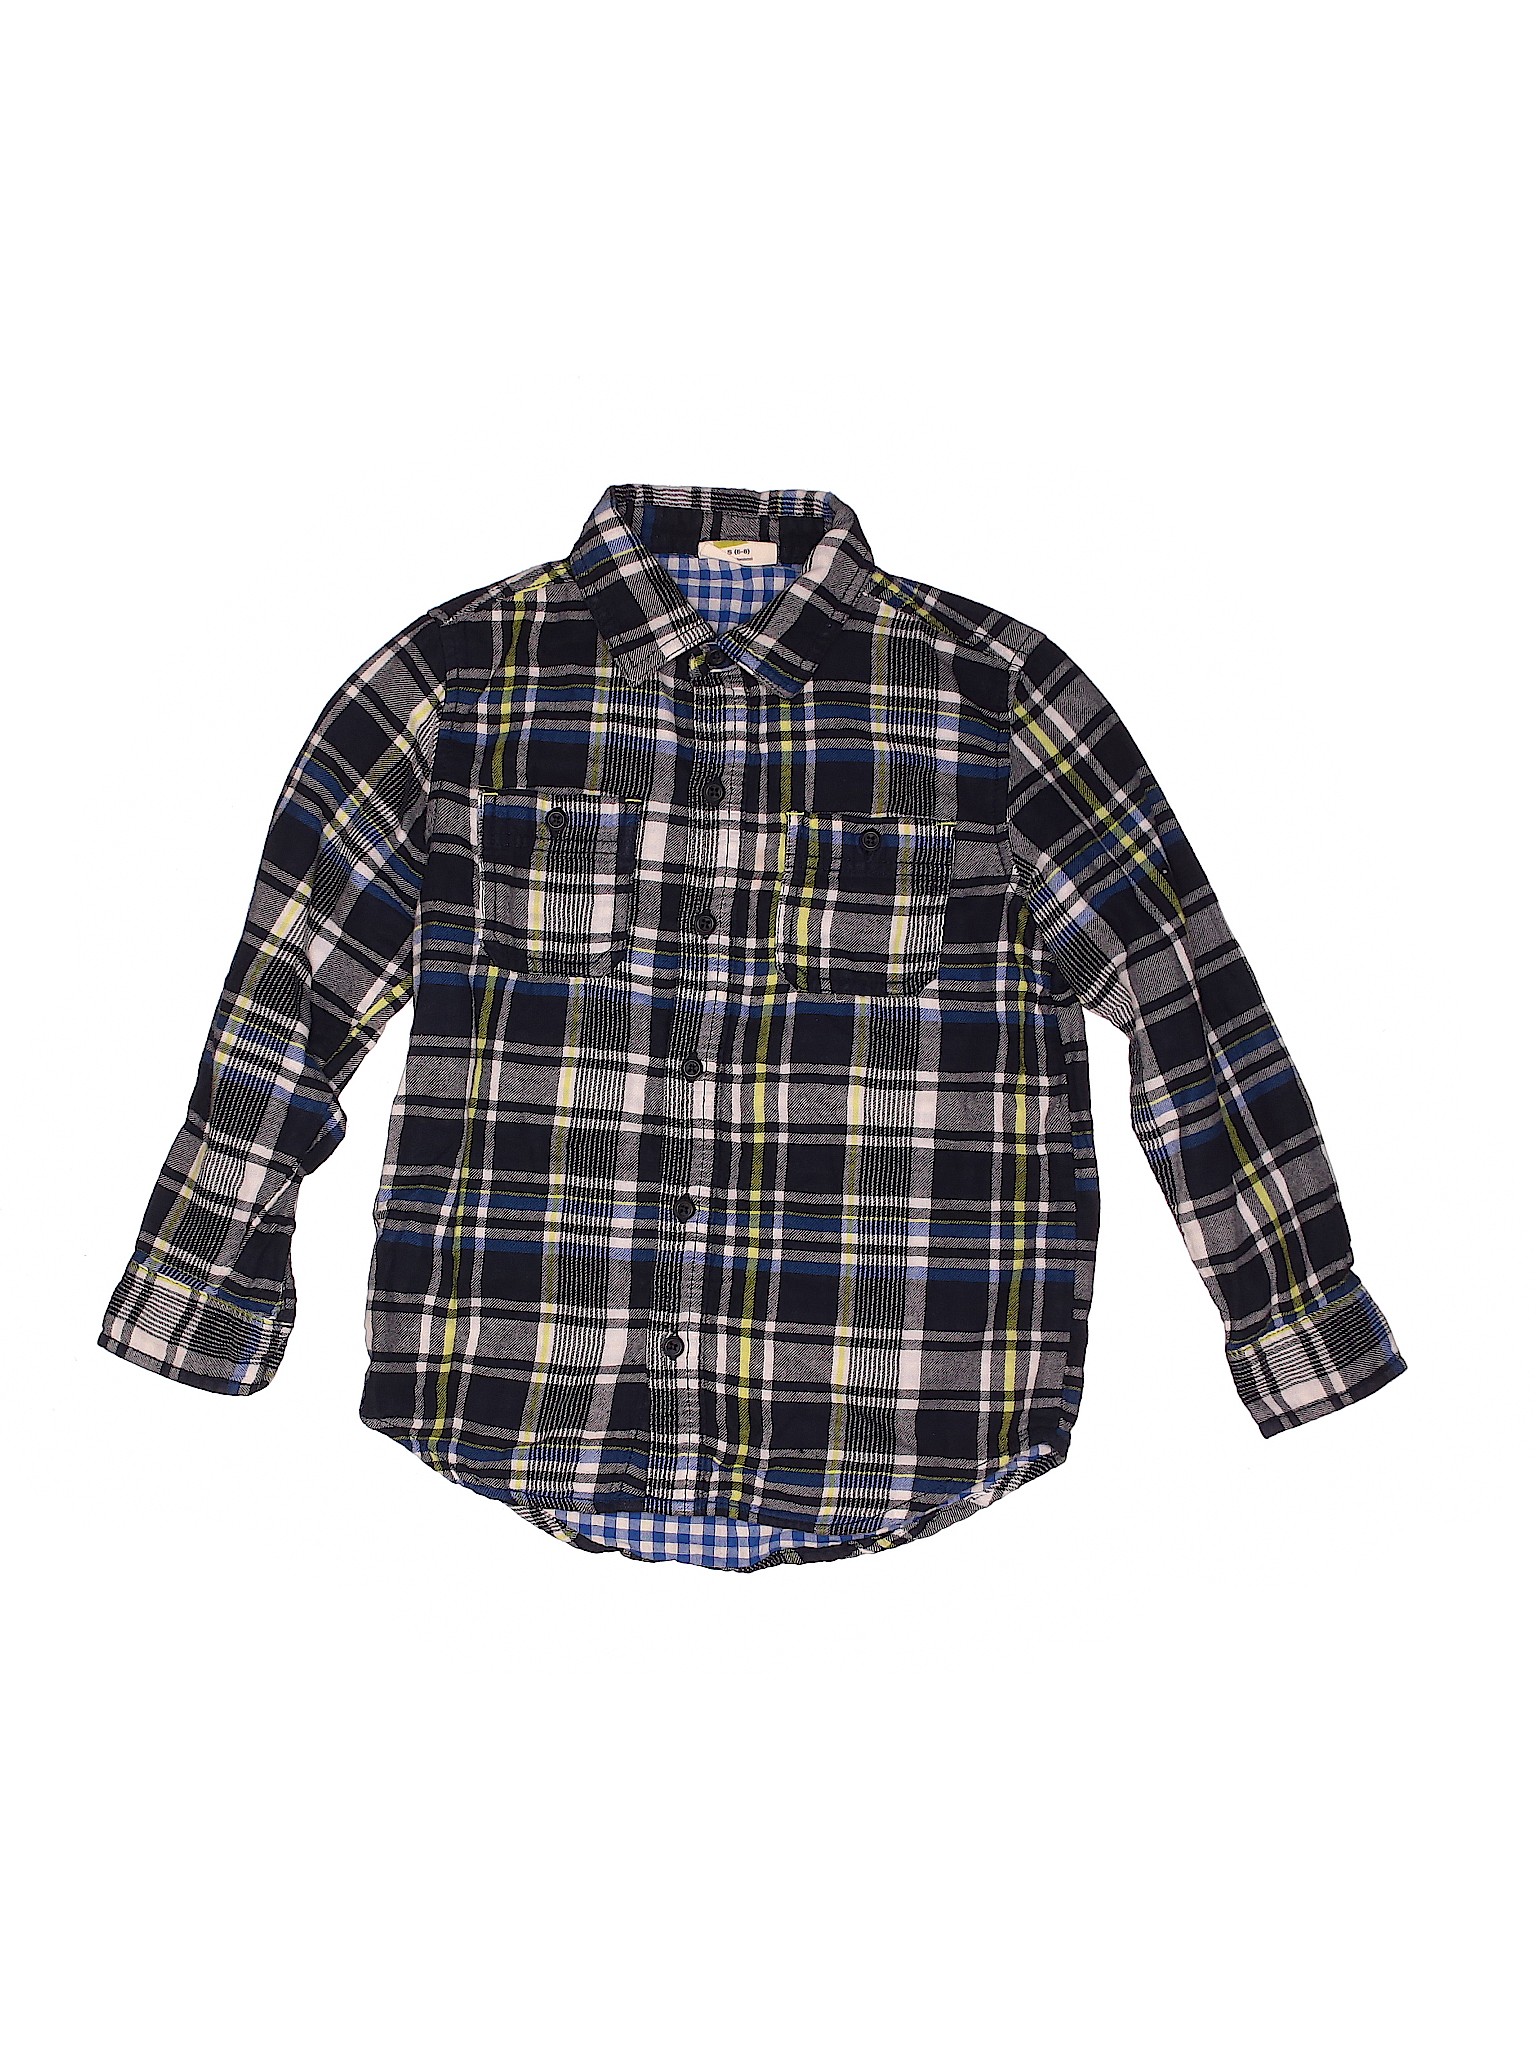 Crazy 8 Boys Blue Long Sleeve Button-Down Shirt 5 | eBay